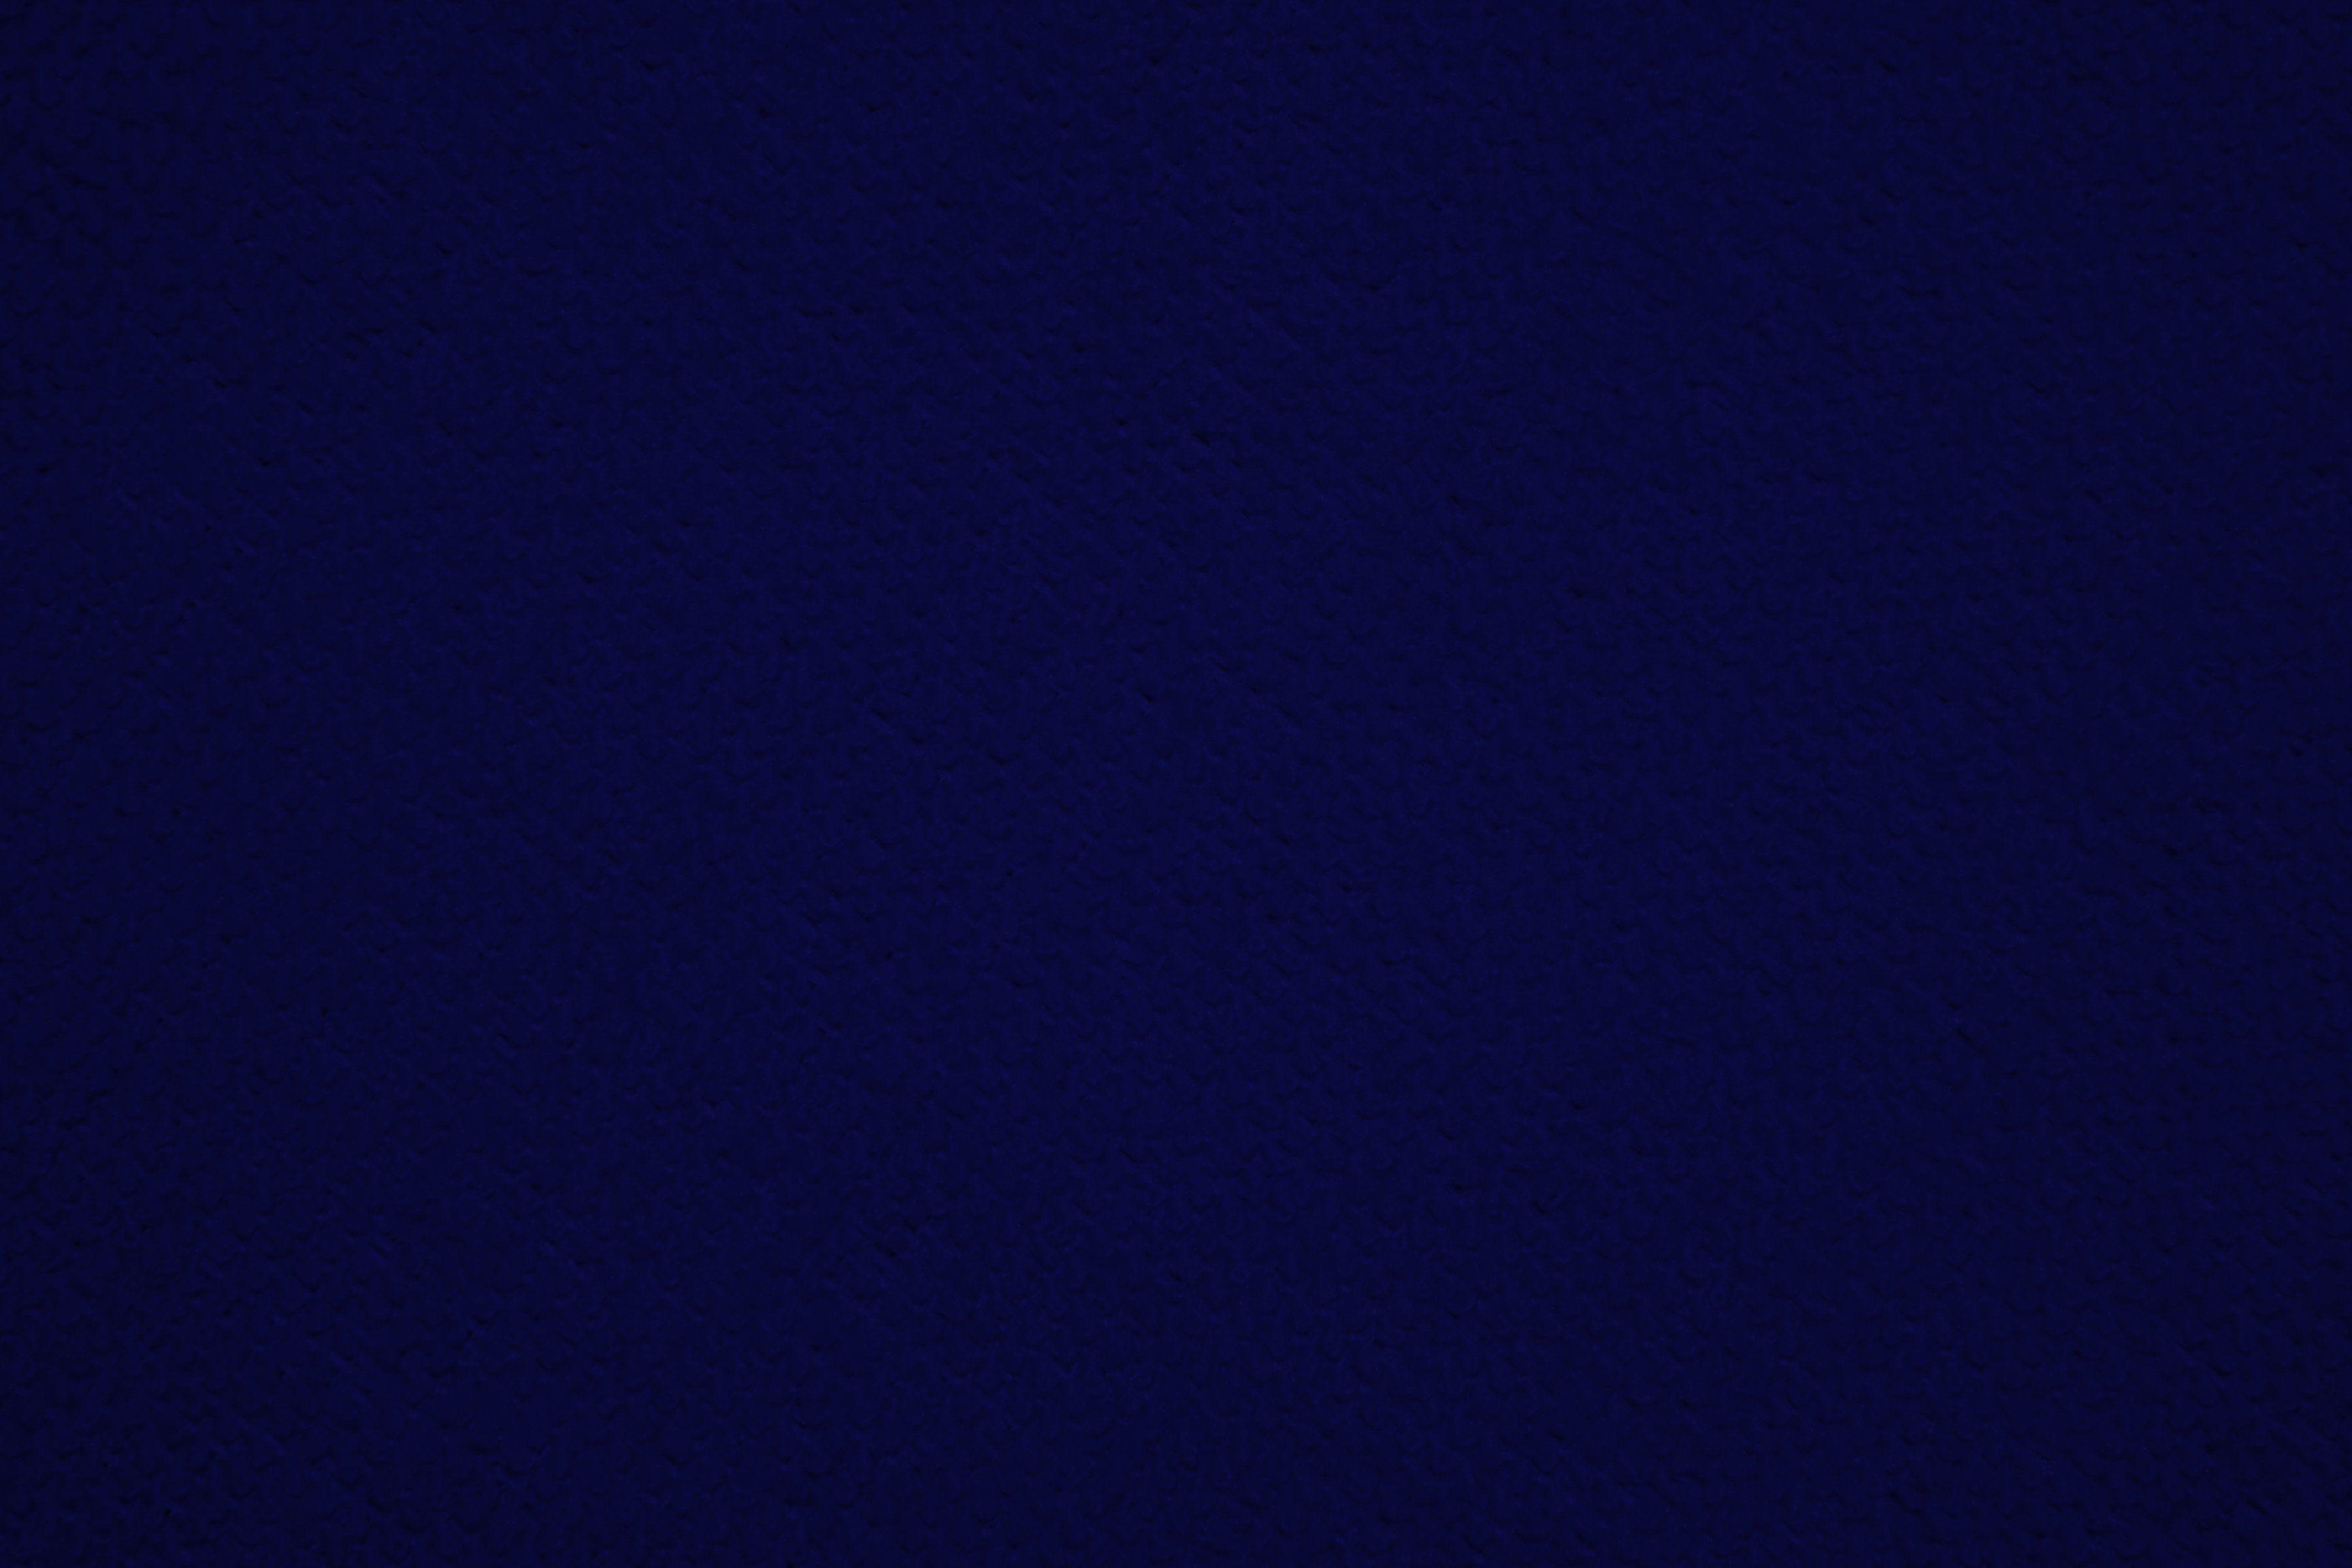 Dark Blue Backgrounds Image 3600x2400